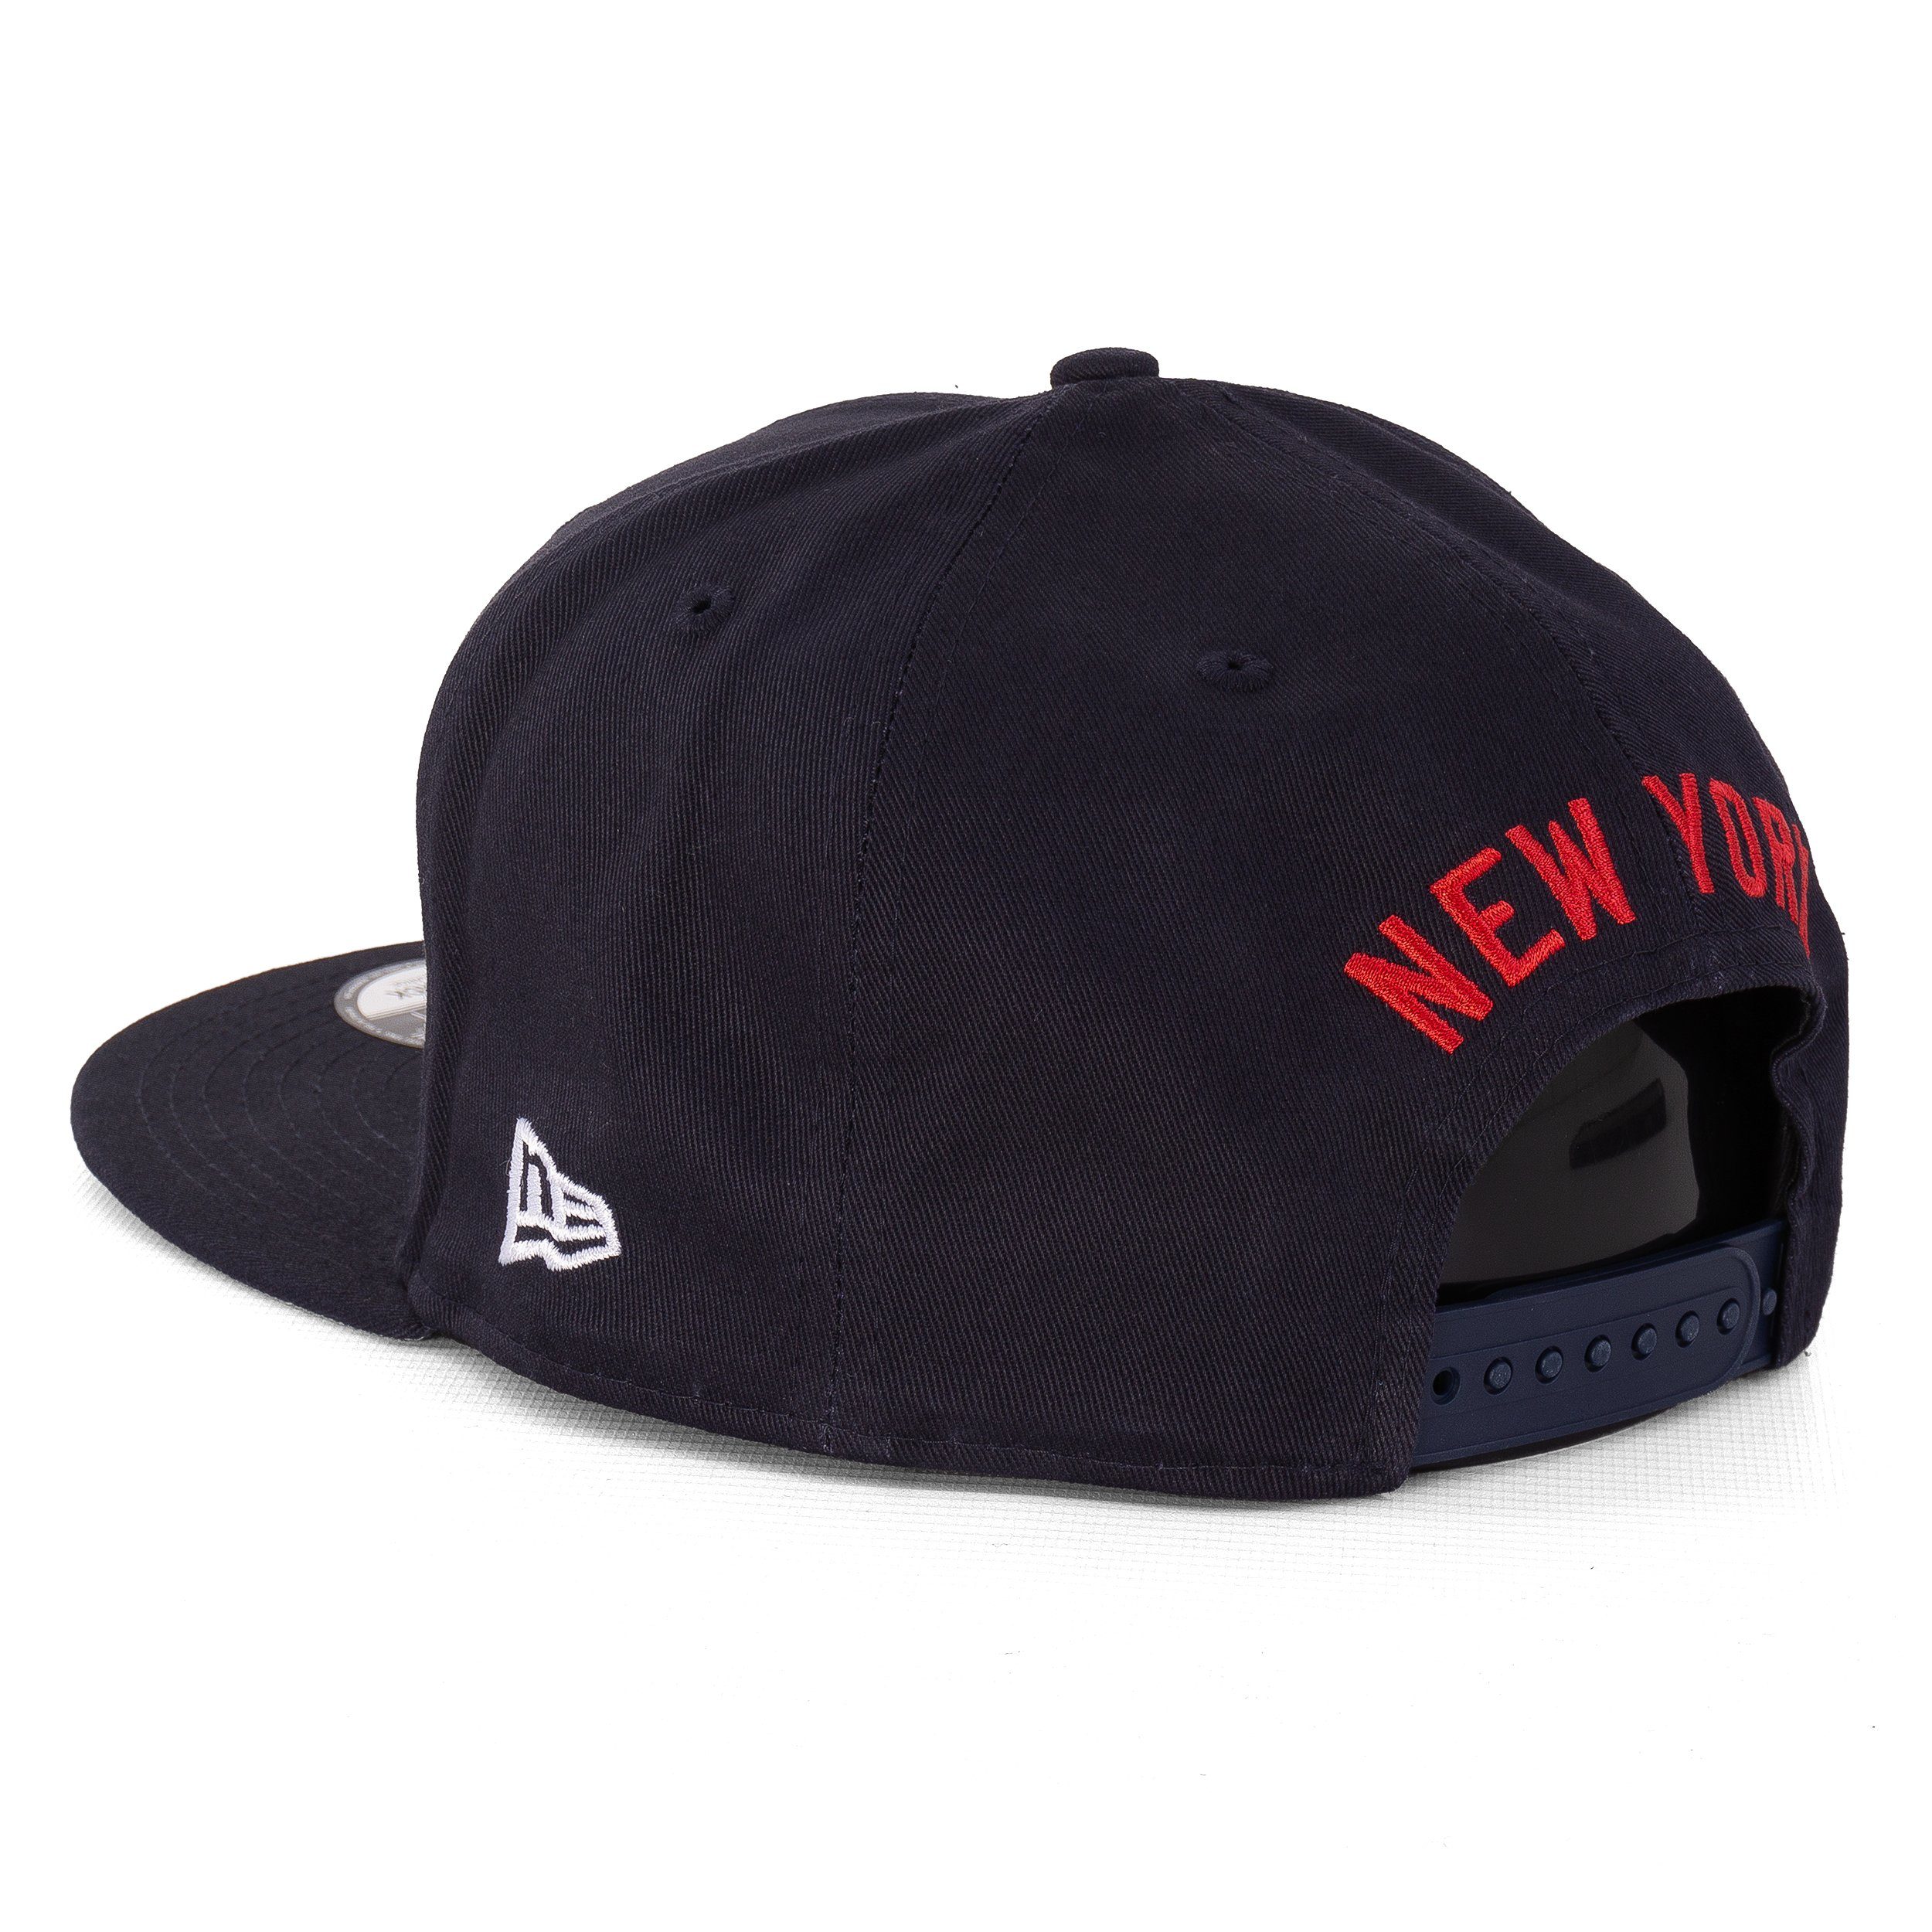 New Era Baseball Cap Cap Side 9Fifty New Era York Patch New Yankees (1-St)